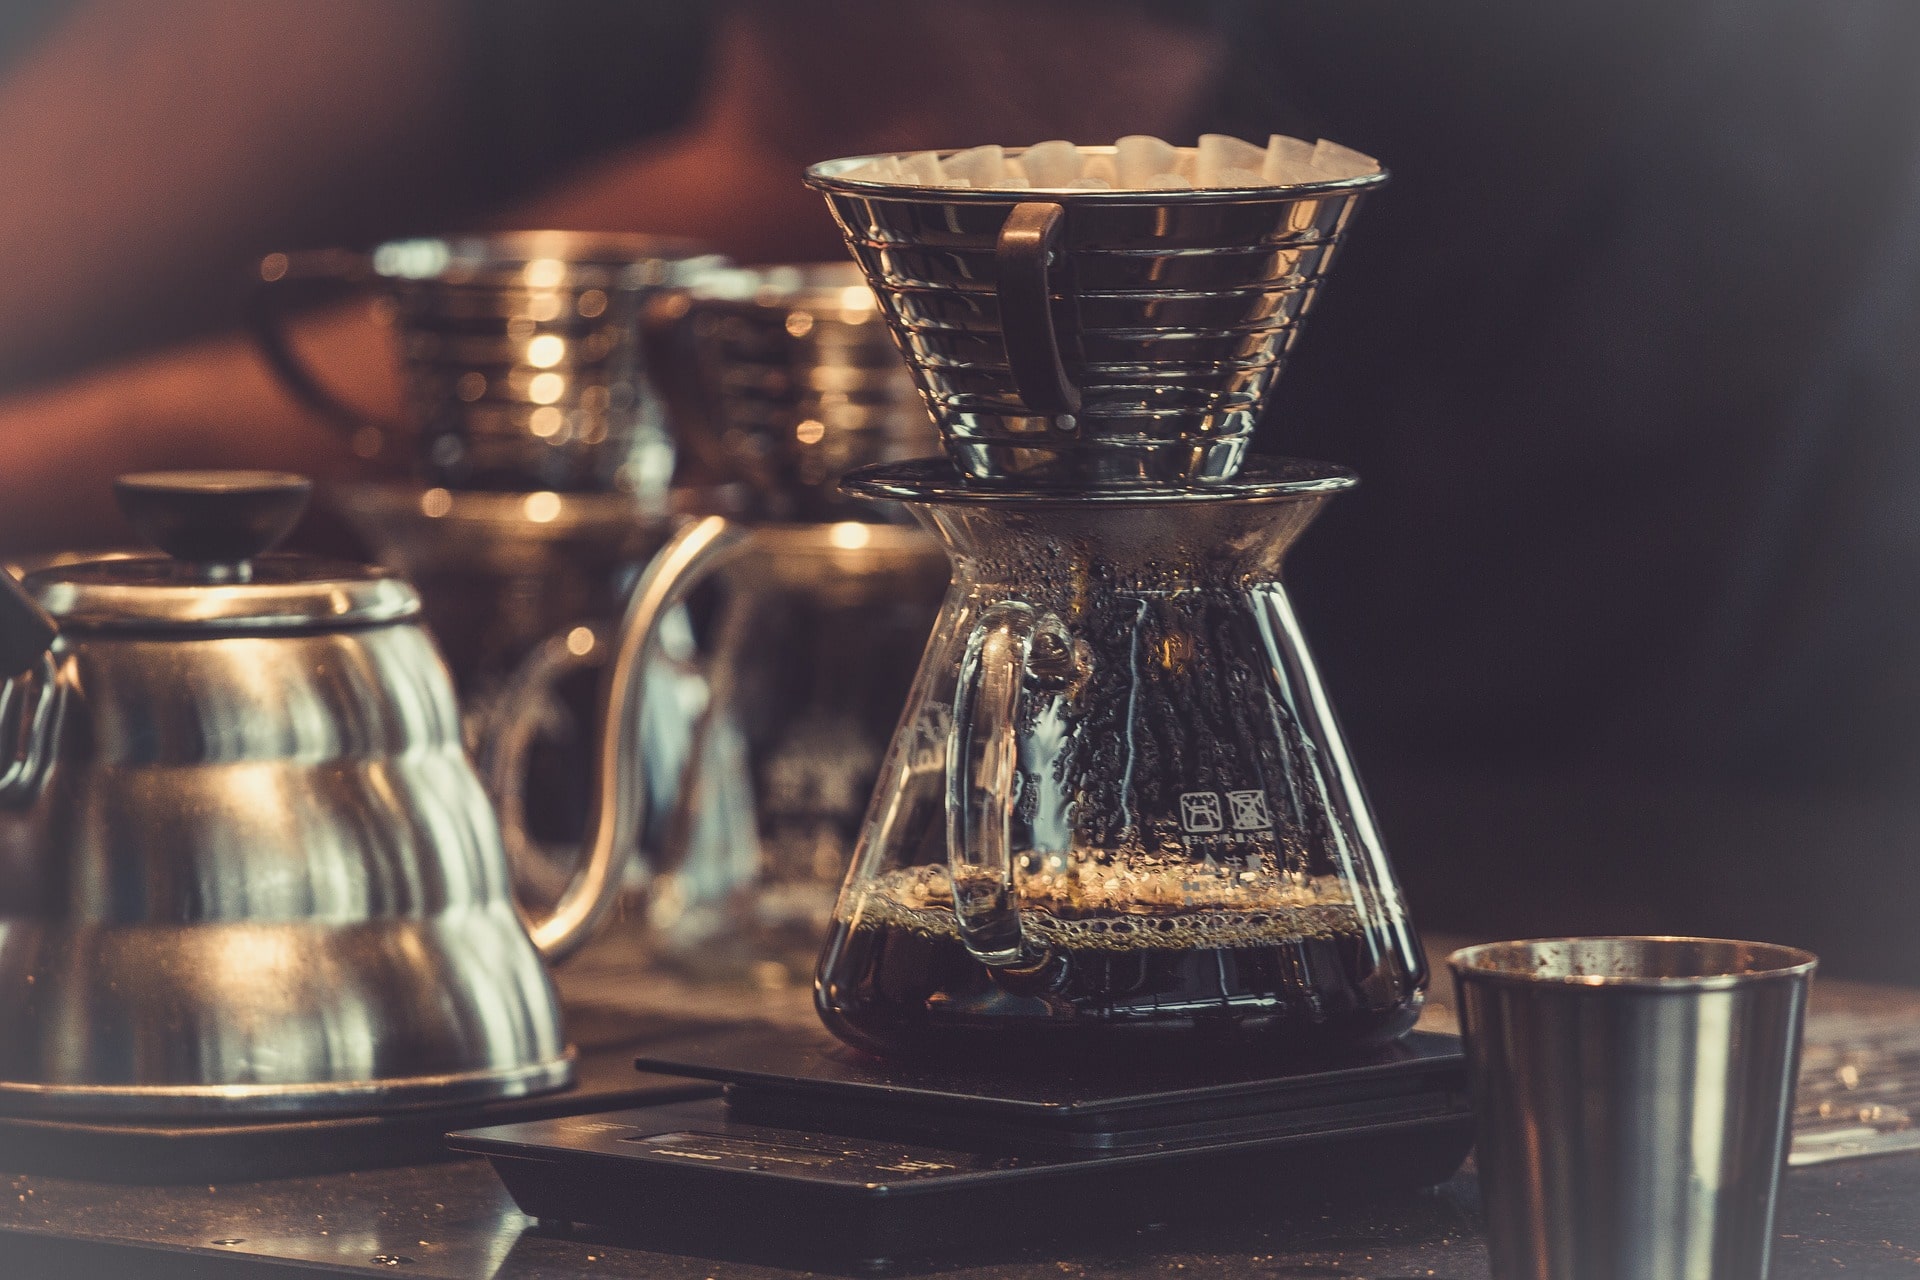 https://www.cafedirect.co.uk/shop/wp-content/uploads/2020/05/coffee_brewing_methods-1.jpg